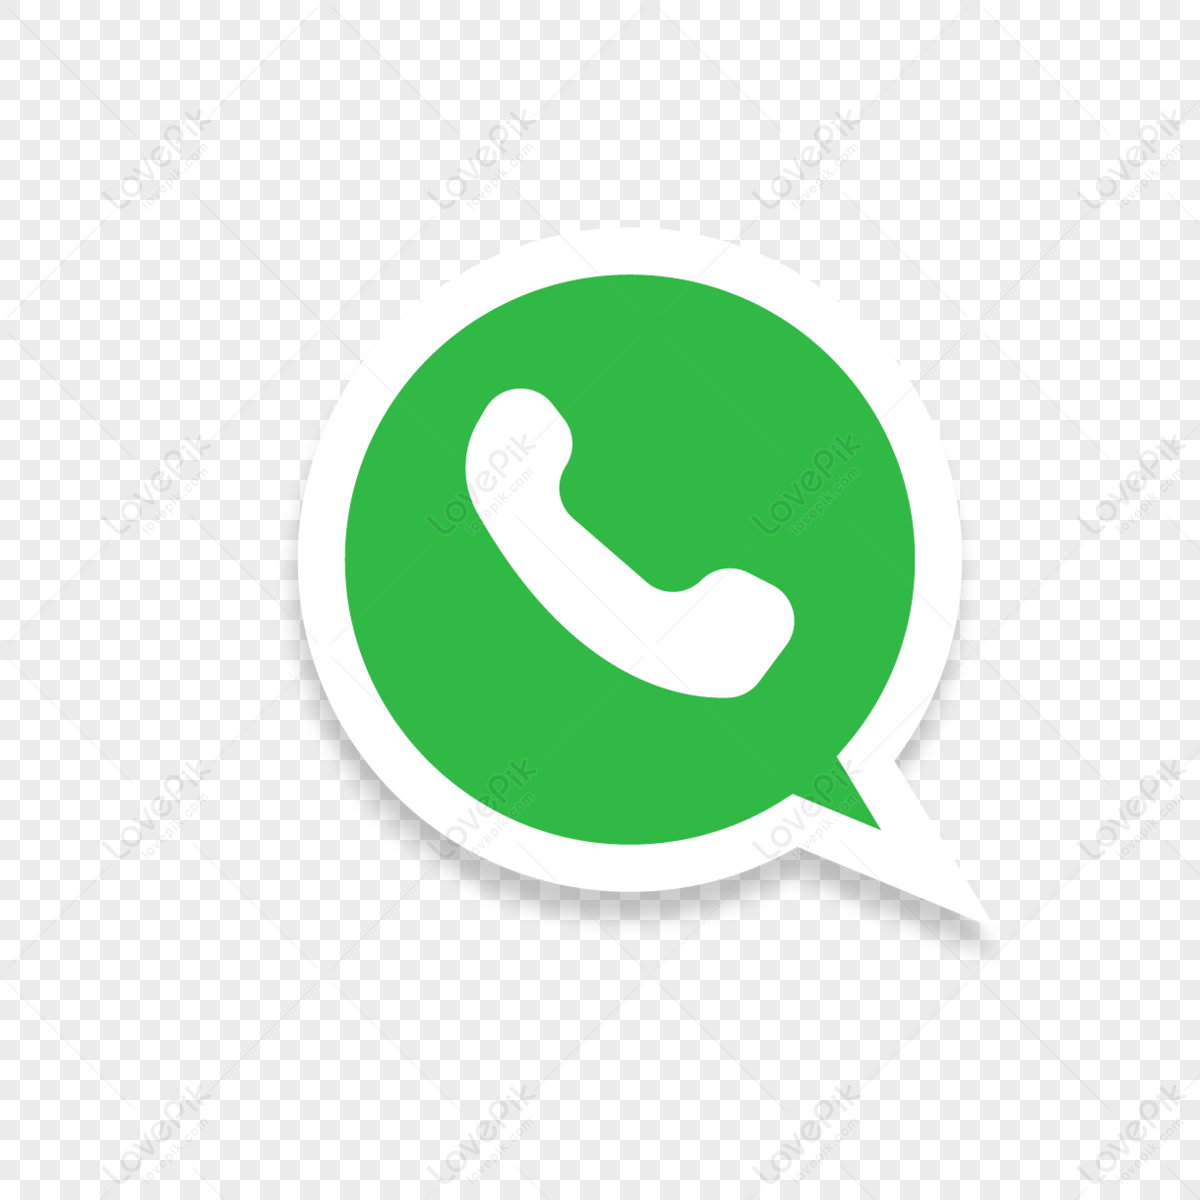 whatsapp icon whatsapp logo free logo design template,sharing,market png image